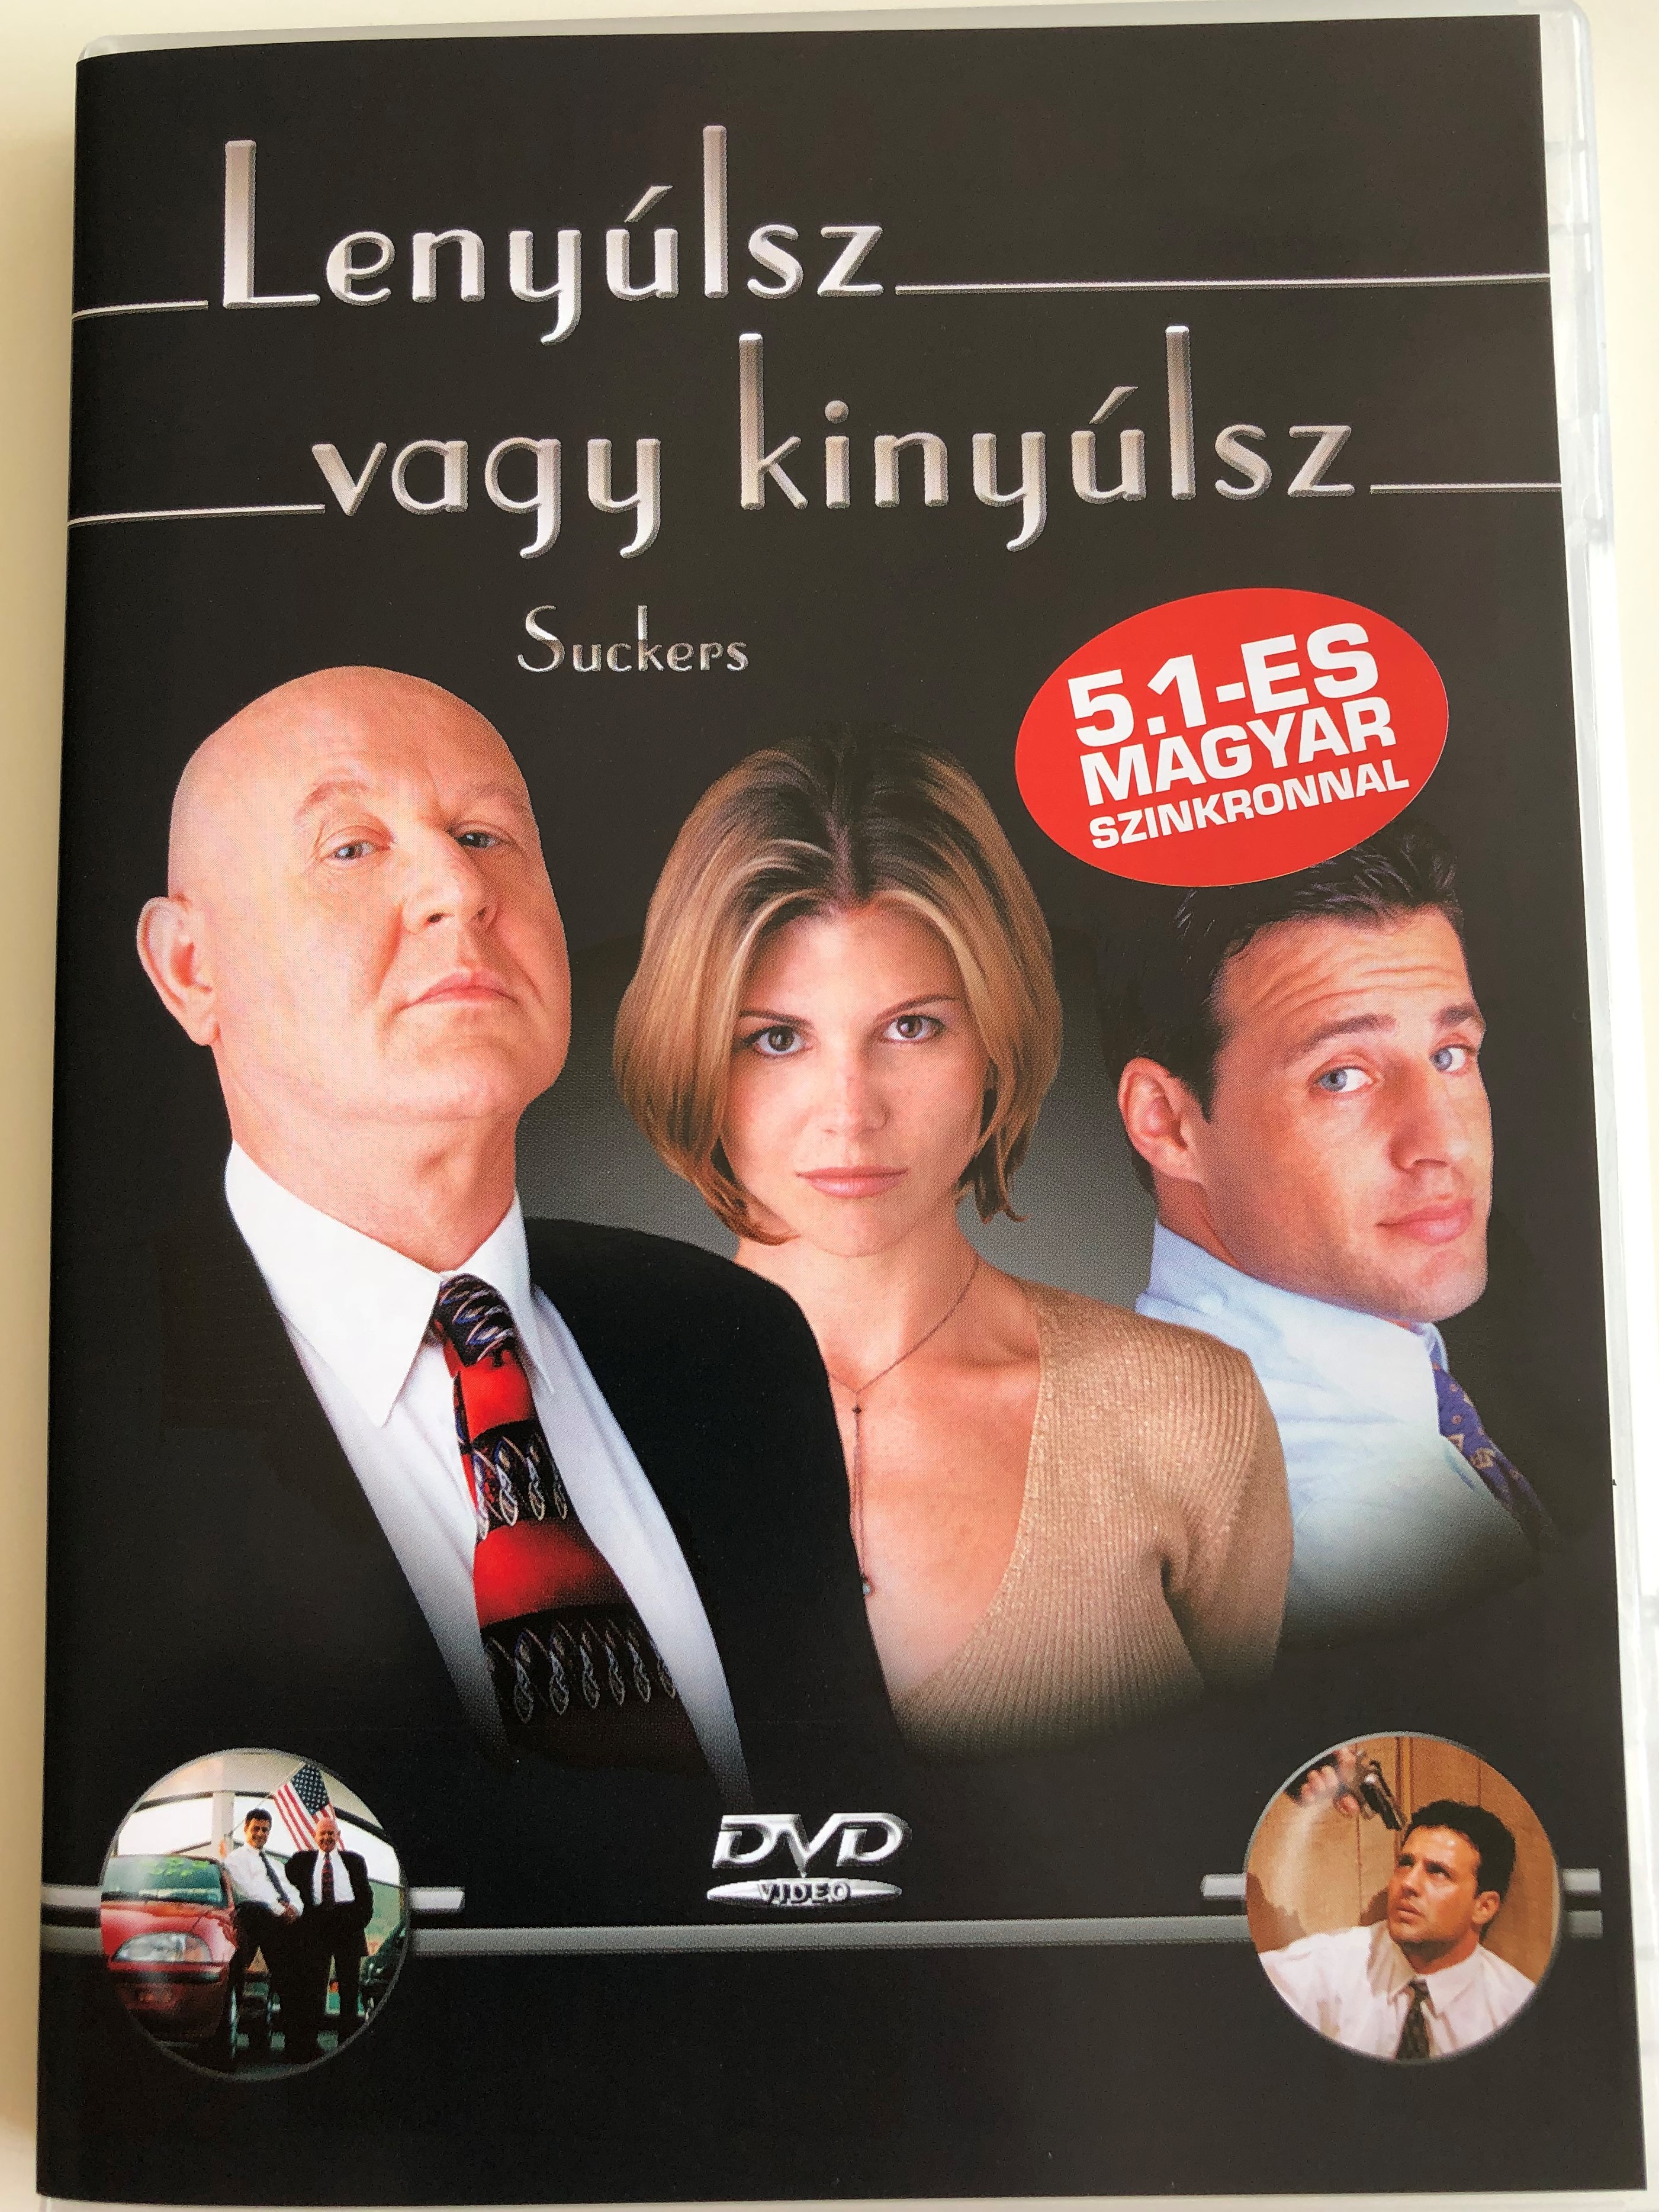 suckers-dvd-2001-leny-lsz-vagy-kiny-lsz-directed-by-roger-nygard-starring-joe-yanetty-jake-johannsen-daniel-benzali-david-ackert-utah-blue-eli-danker-1-.jpg